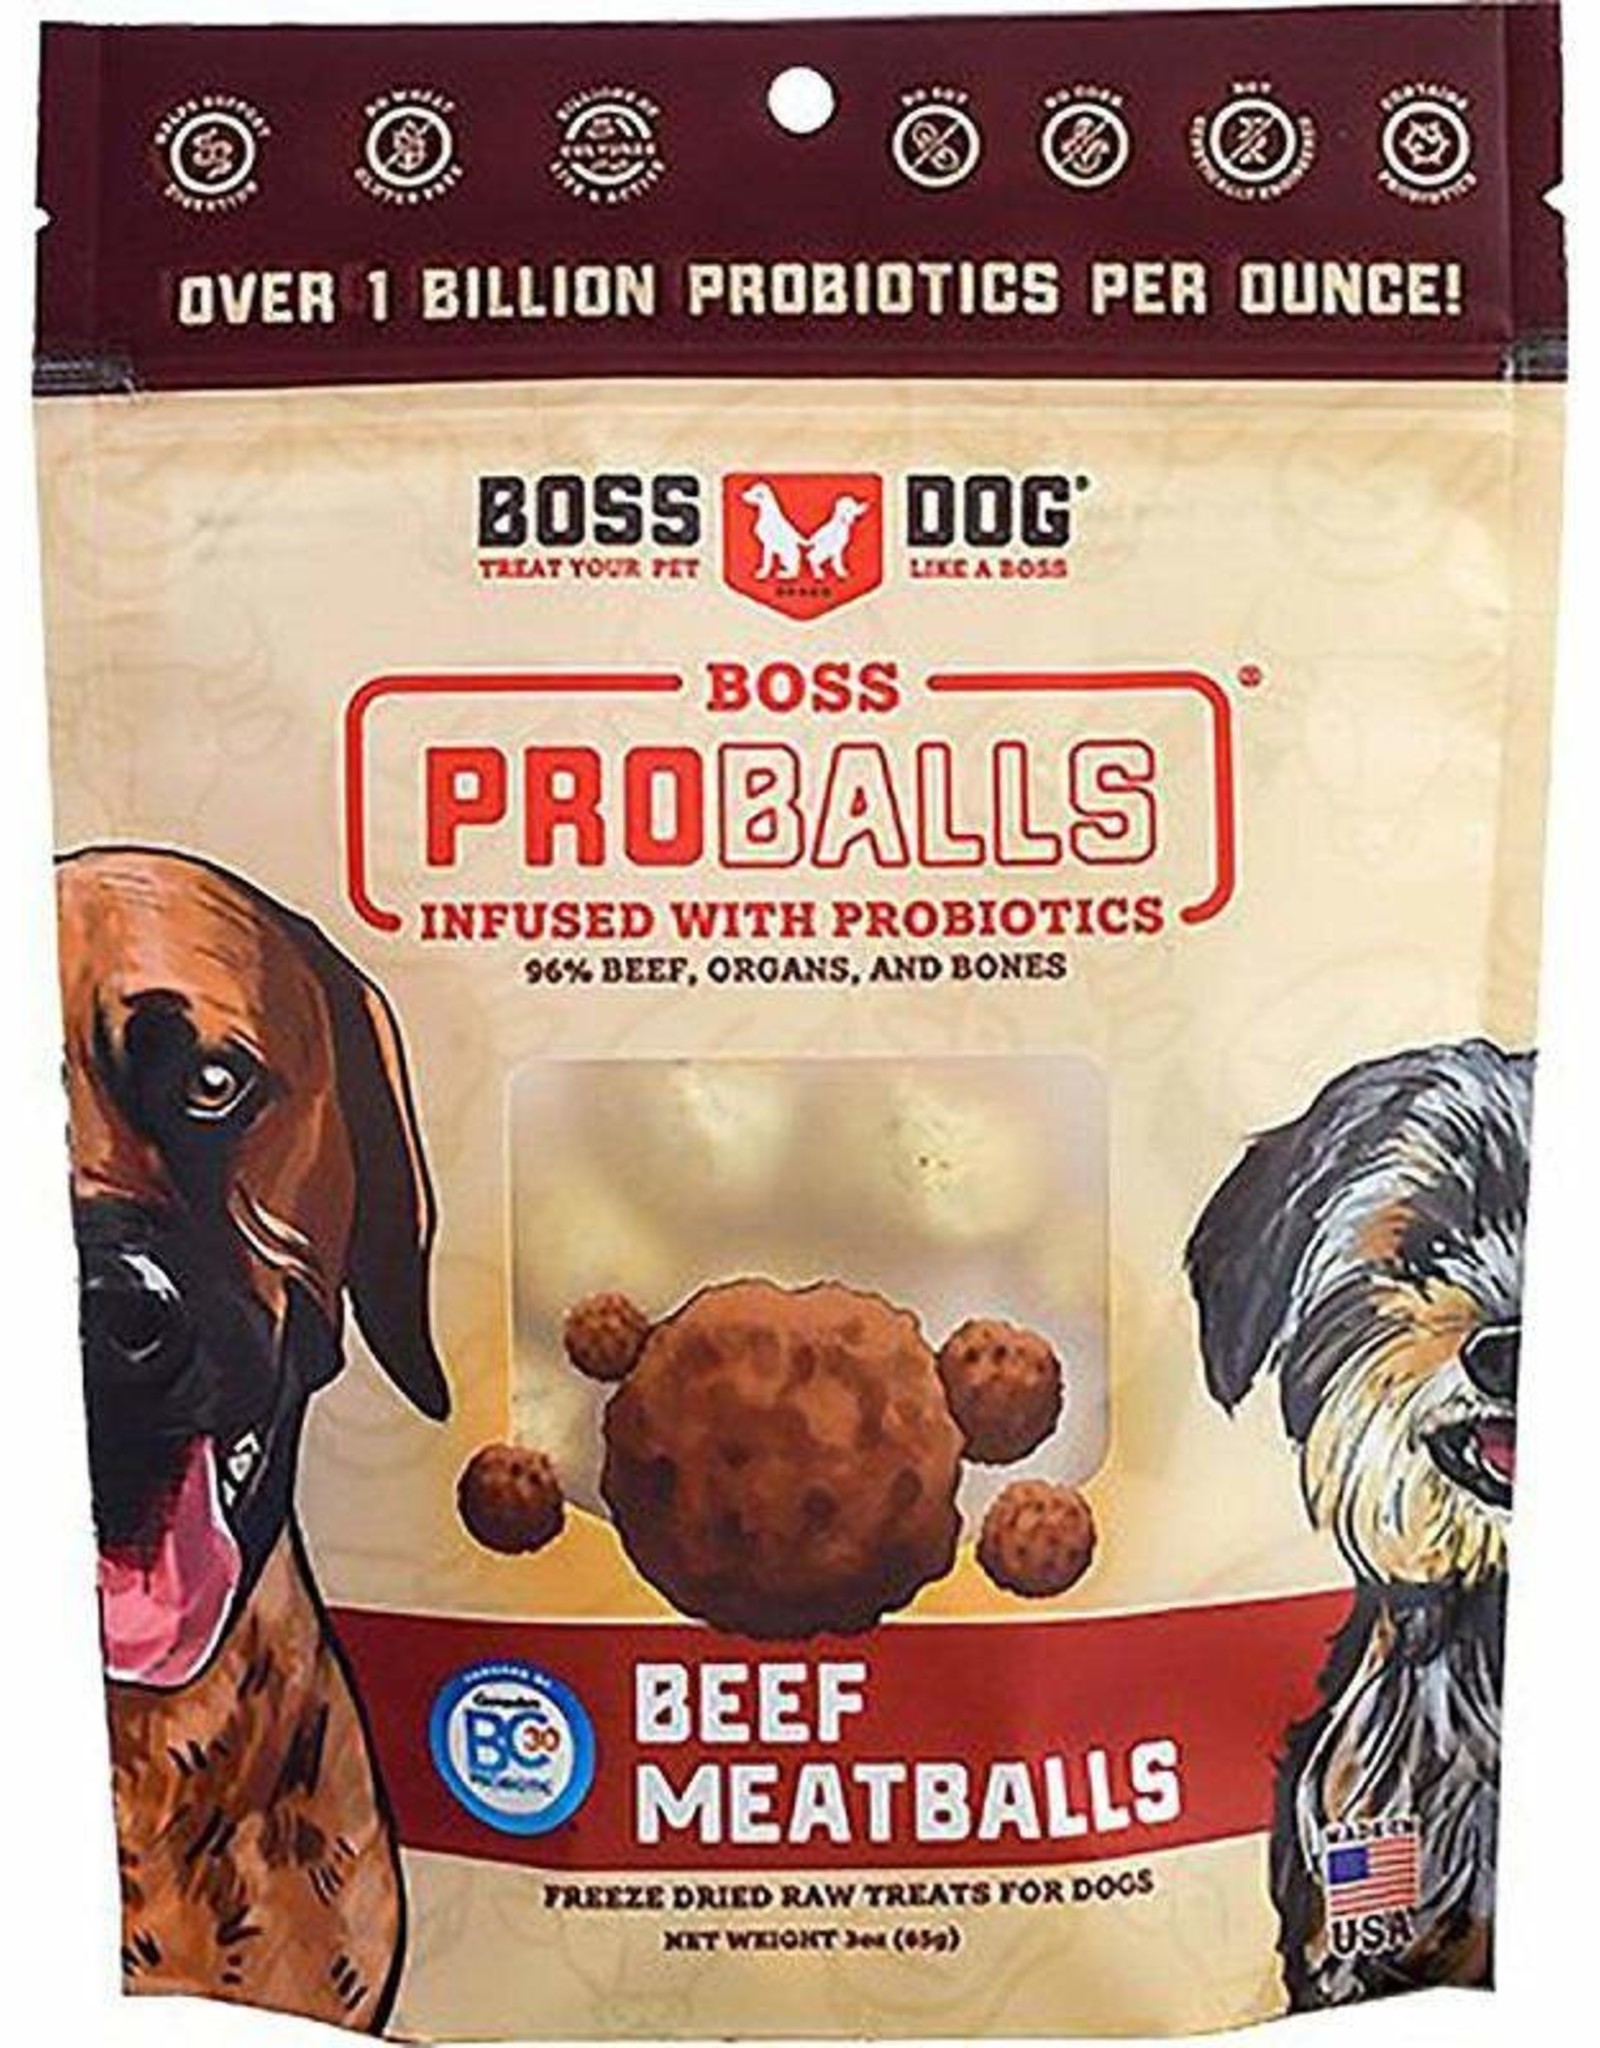 BossDog Boss Dog Proball Beef 3oz